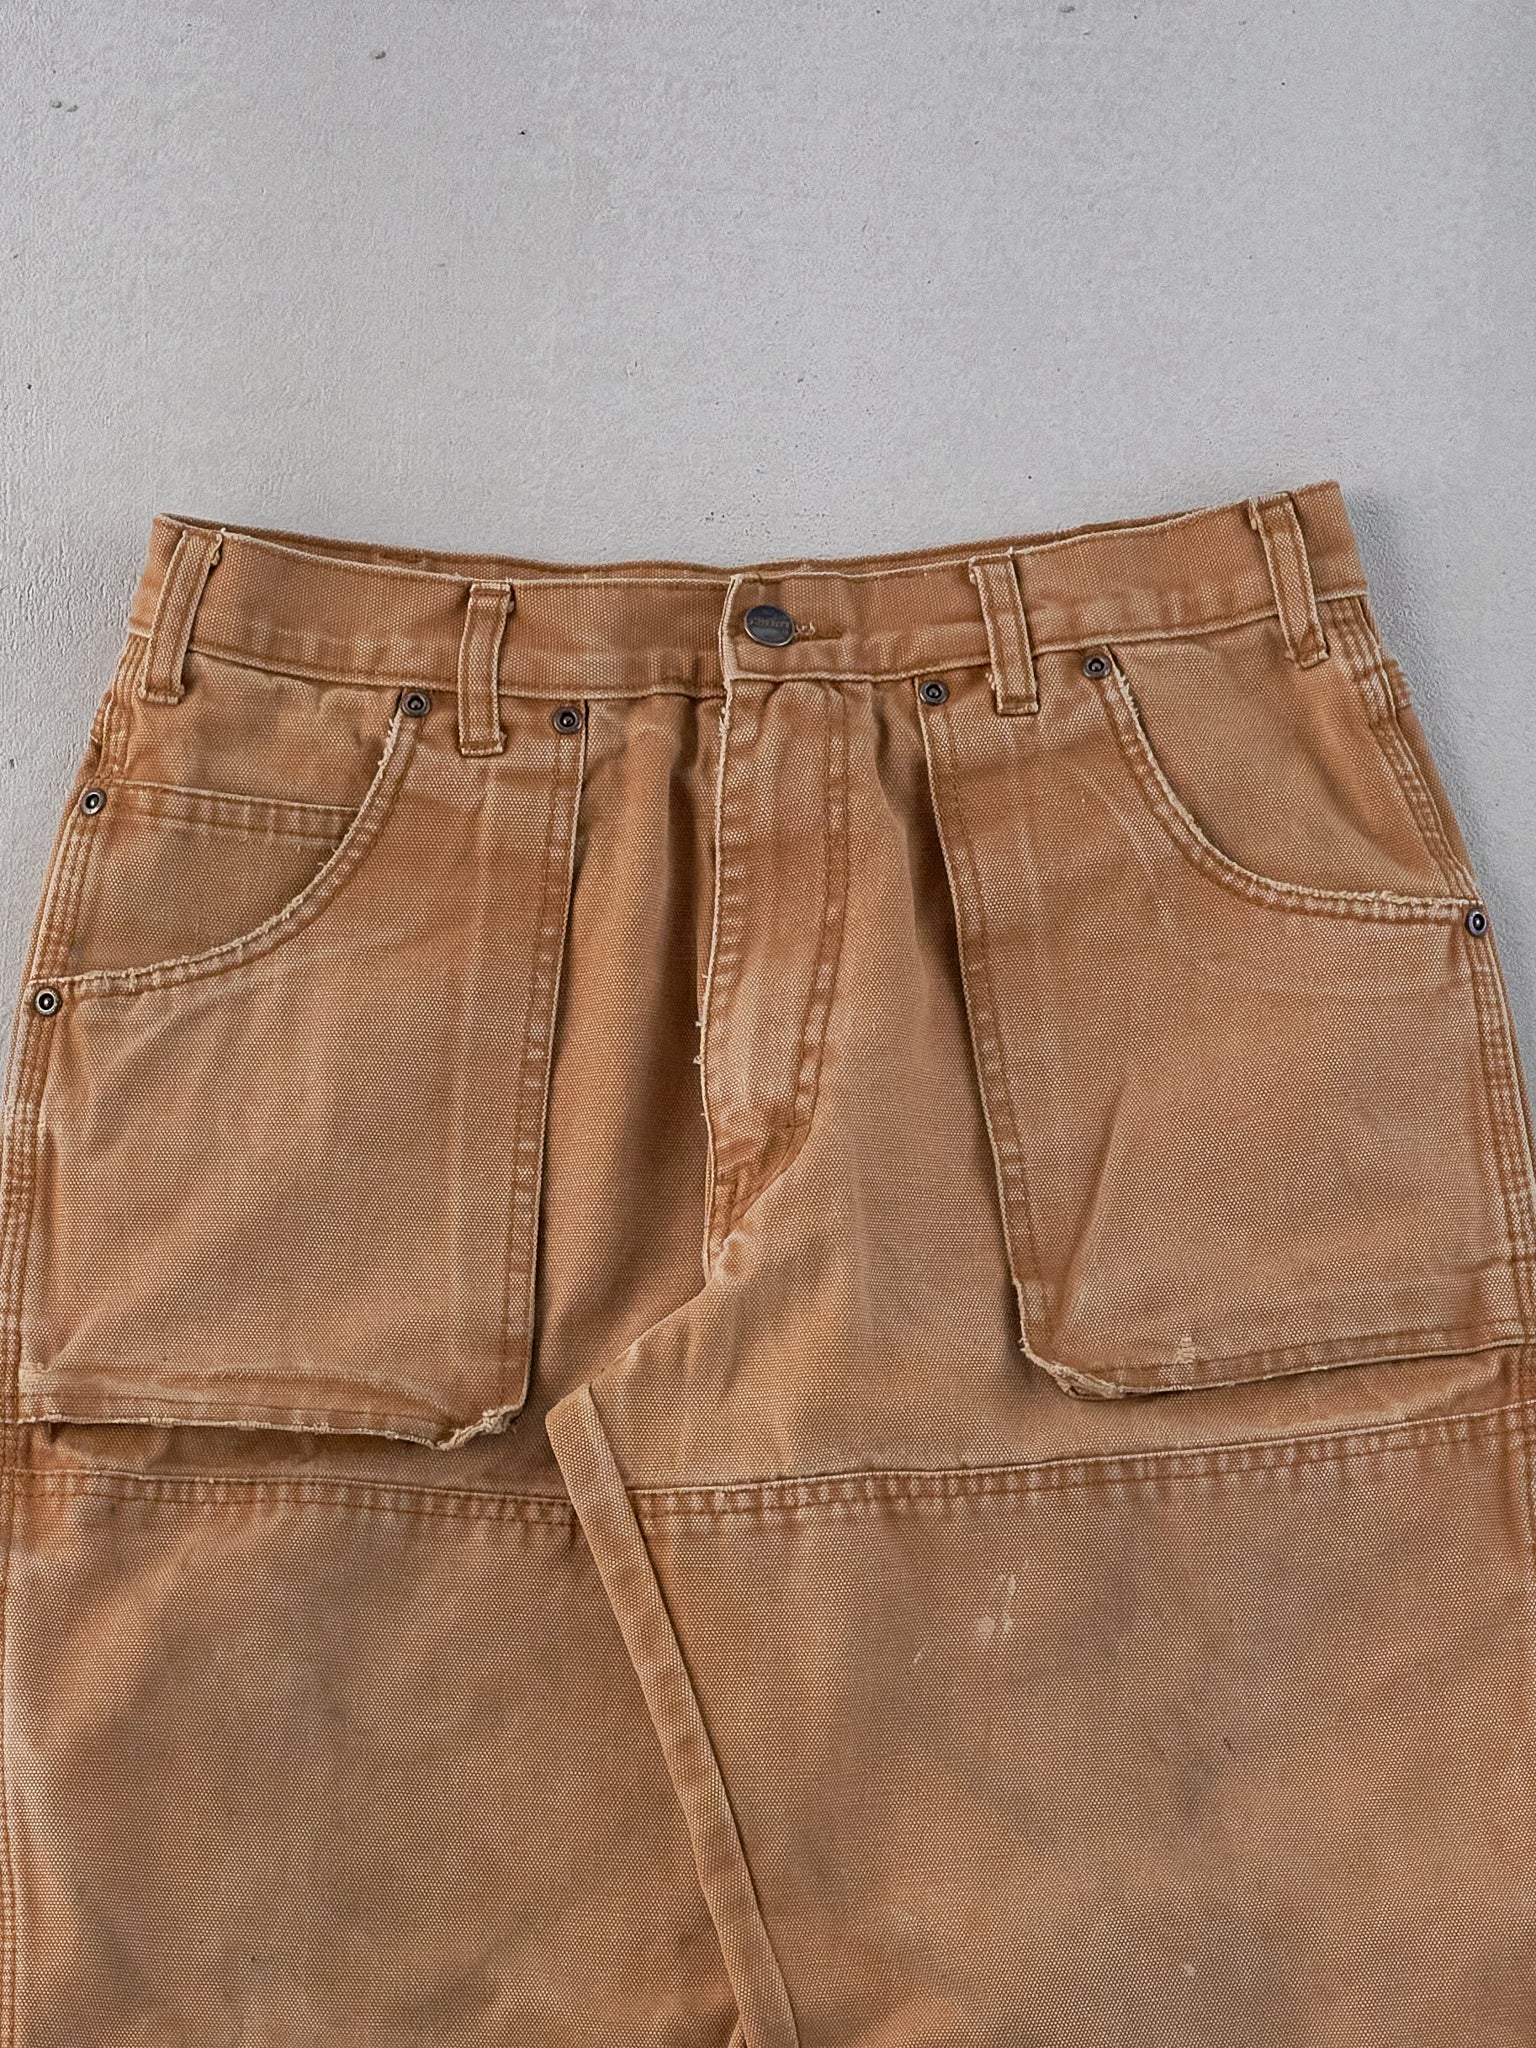 Vintage 90s Khaki Dickies Double Knee Carpenter Pants (29x30)